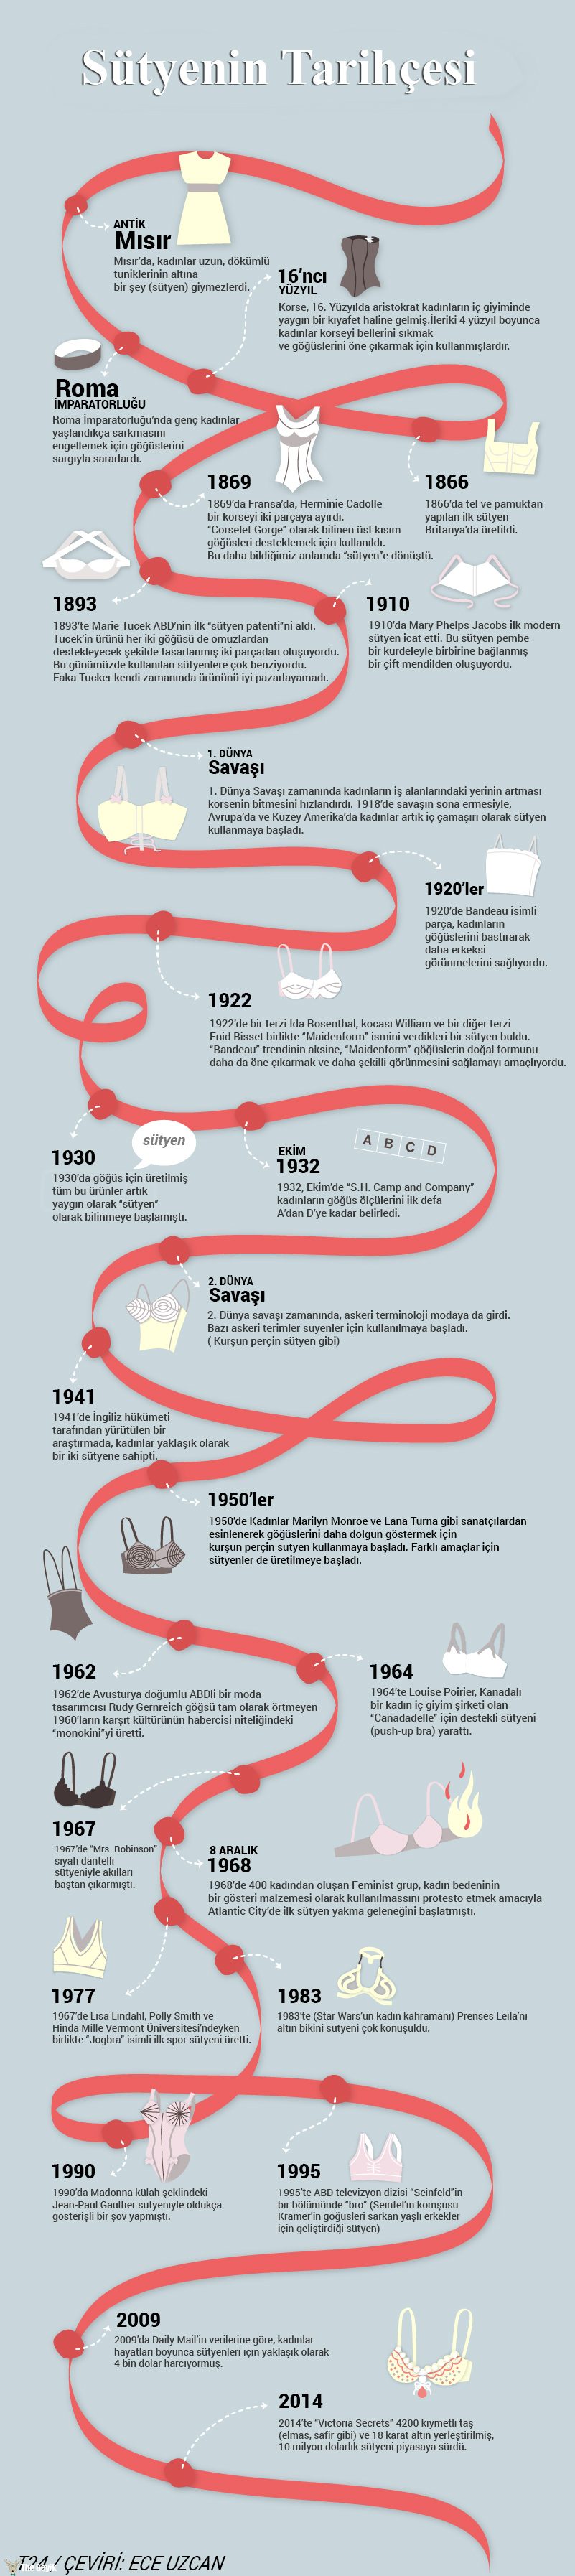 sutyen-tarihi-infografik-son